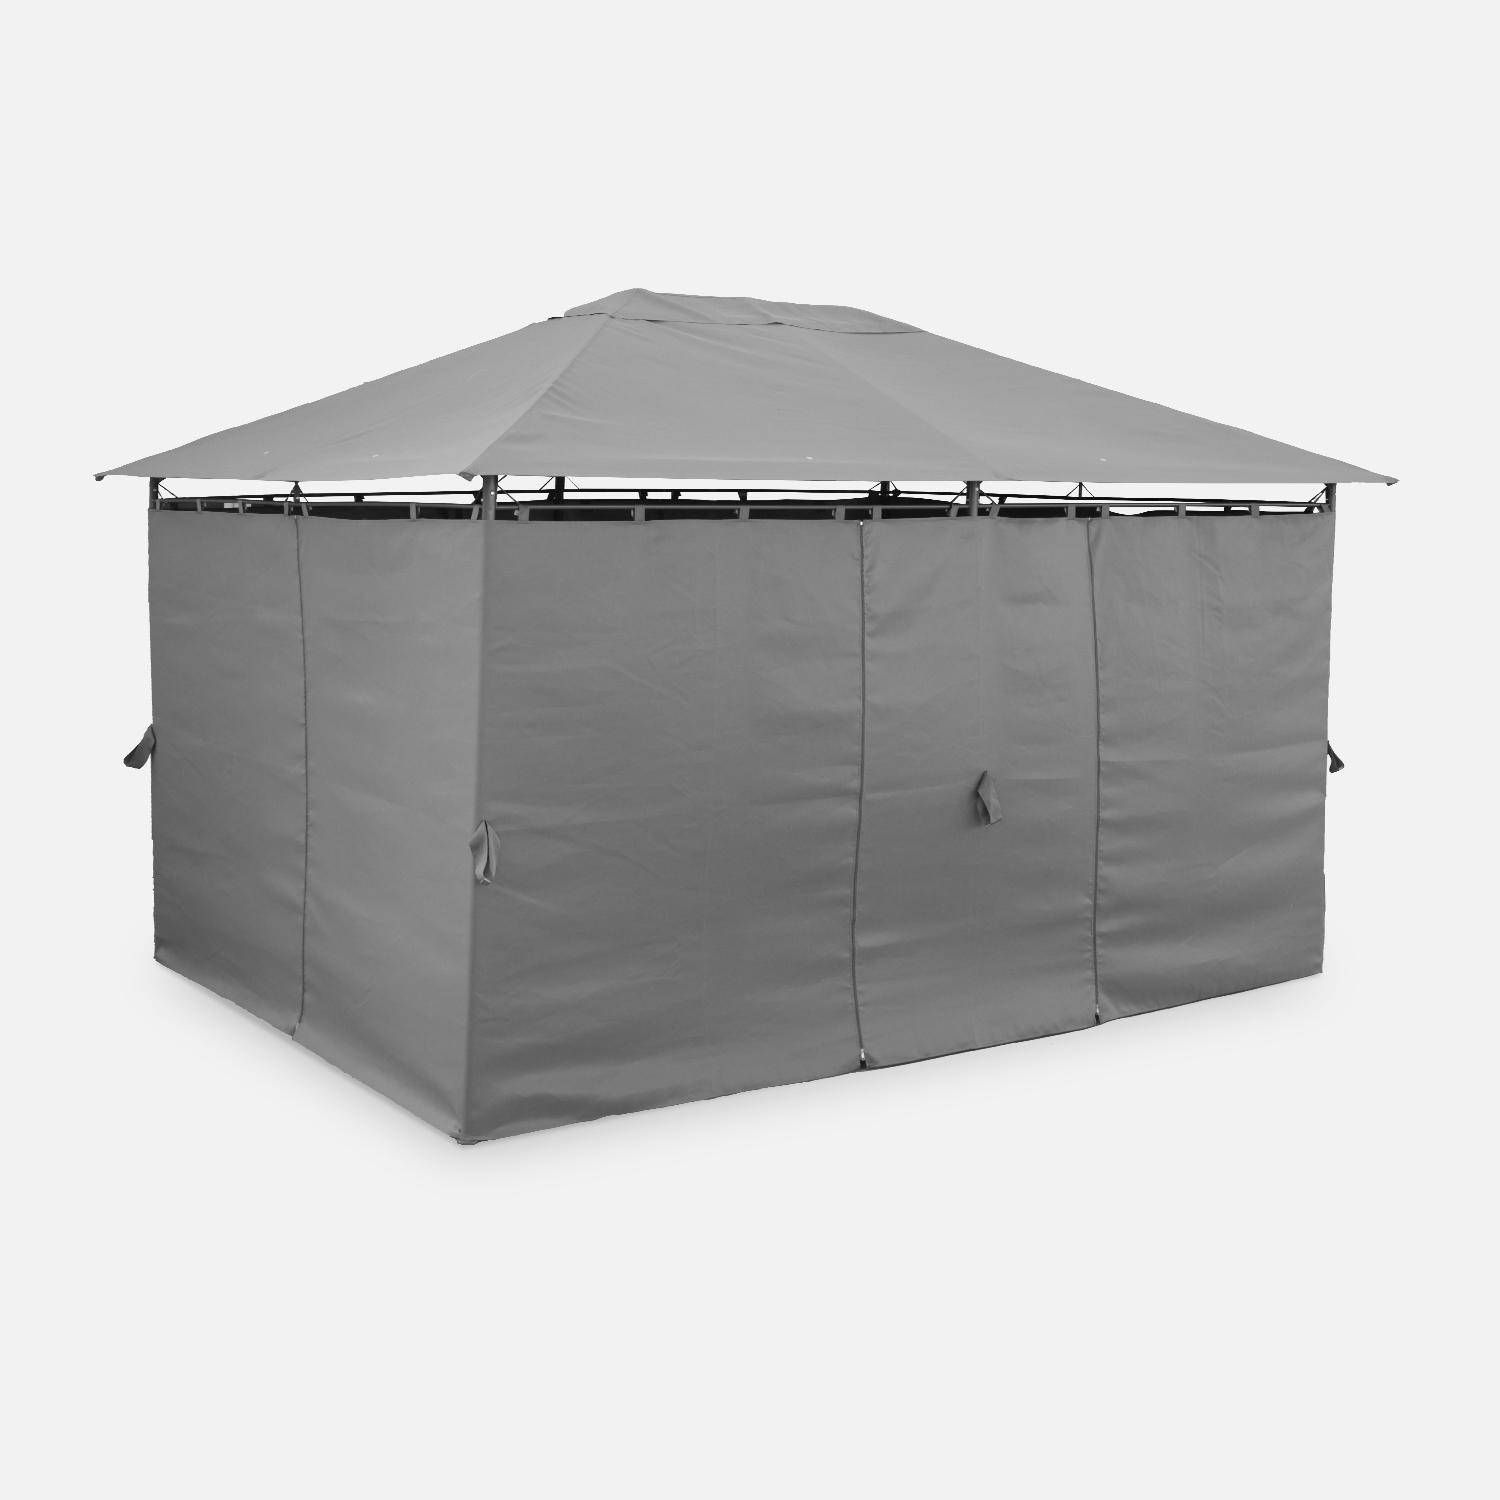 Pergola 3x4m - Divio - Tela grigia - Pergola con tende, tenda da giardino, gazebo, ricevimenti Photo3